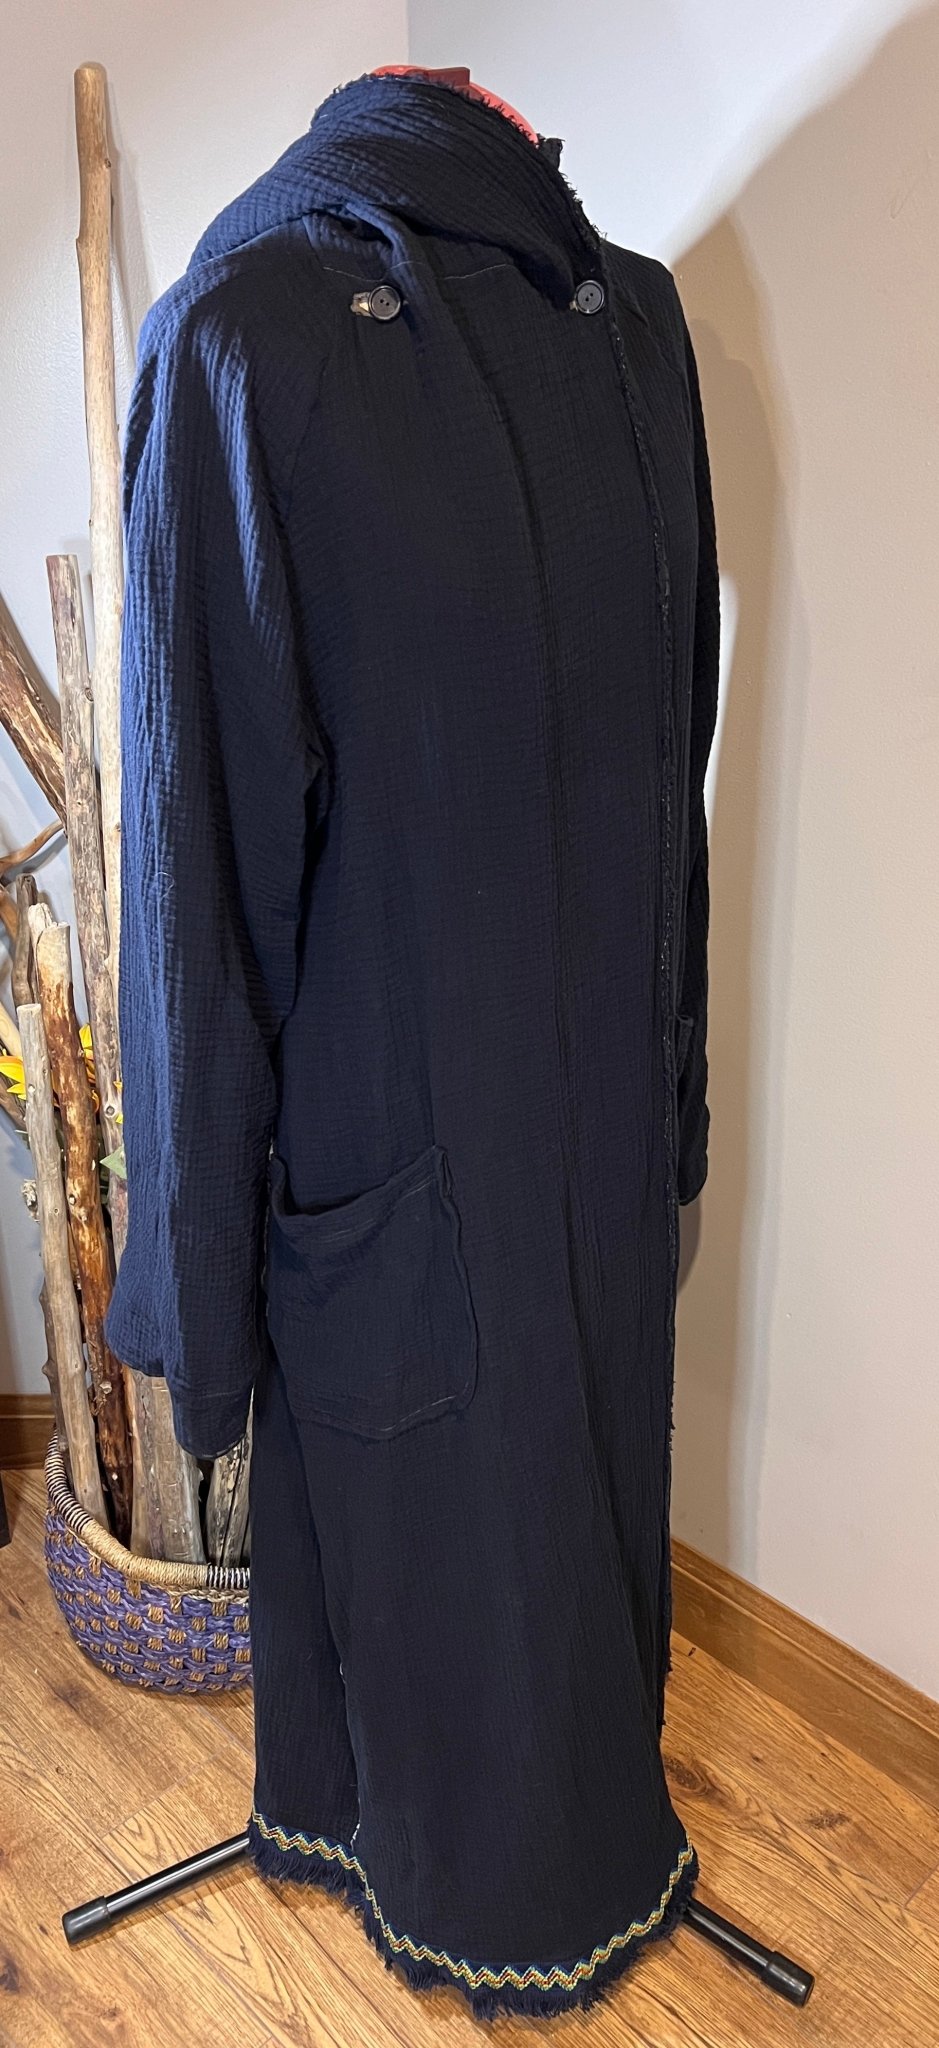 Long Navy Blue Cotton Cardigan Jacket - Naturenspires